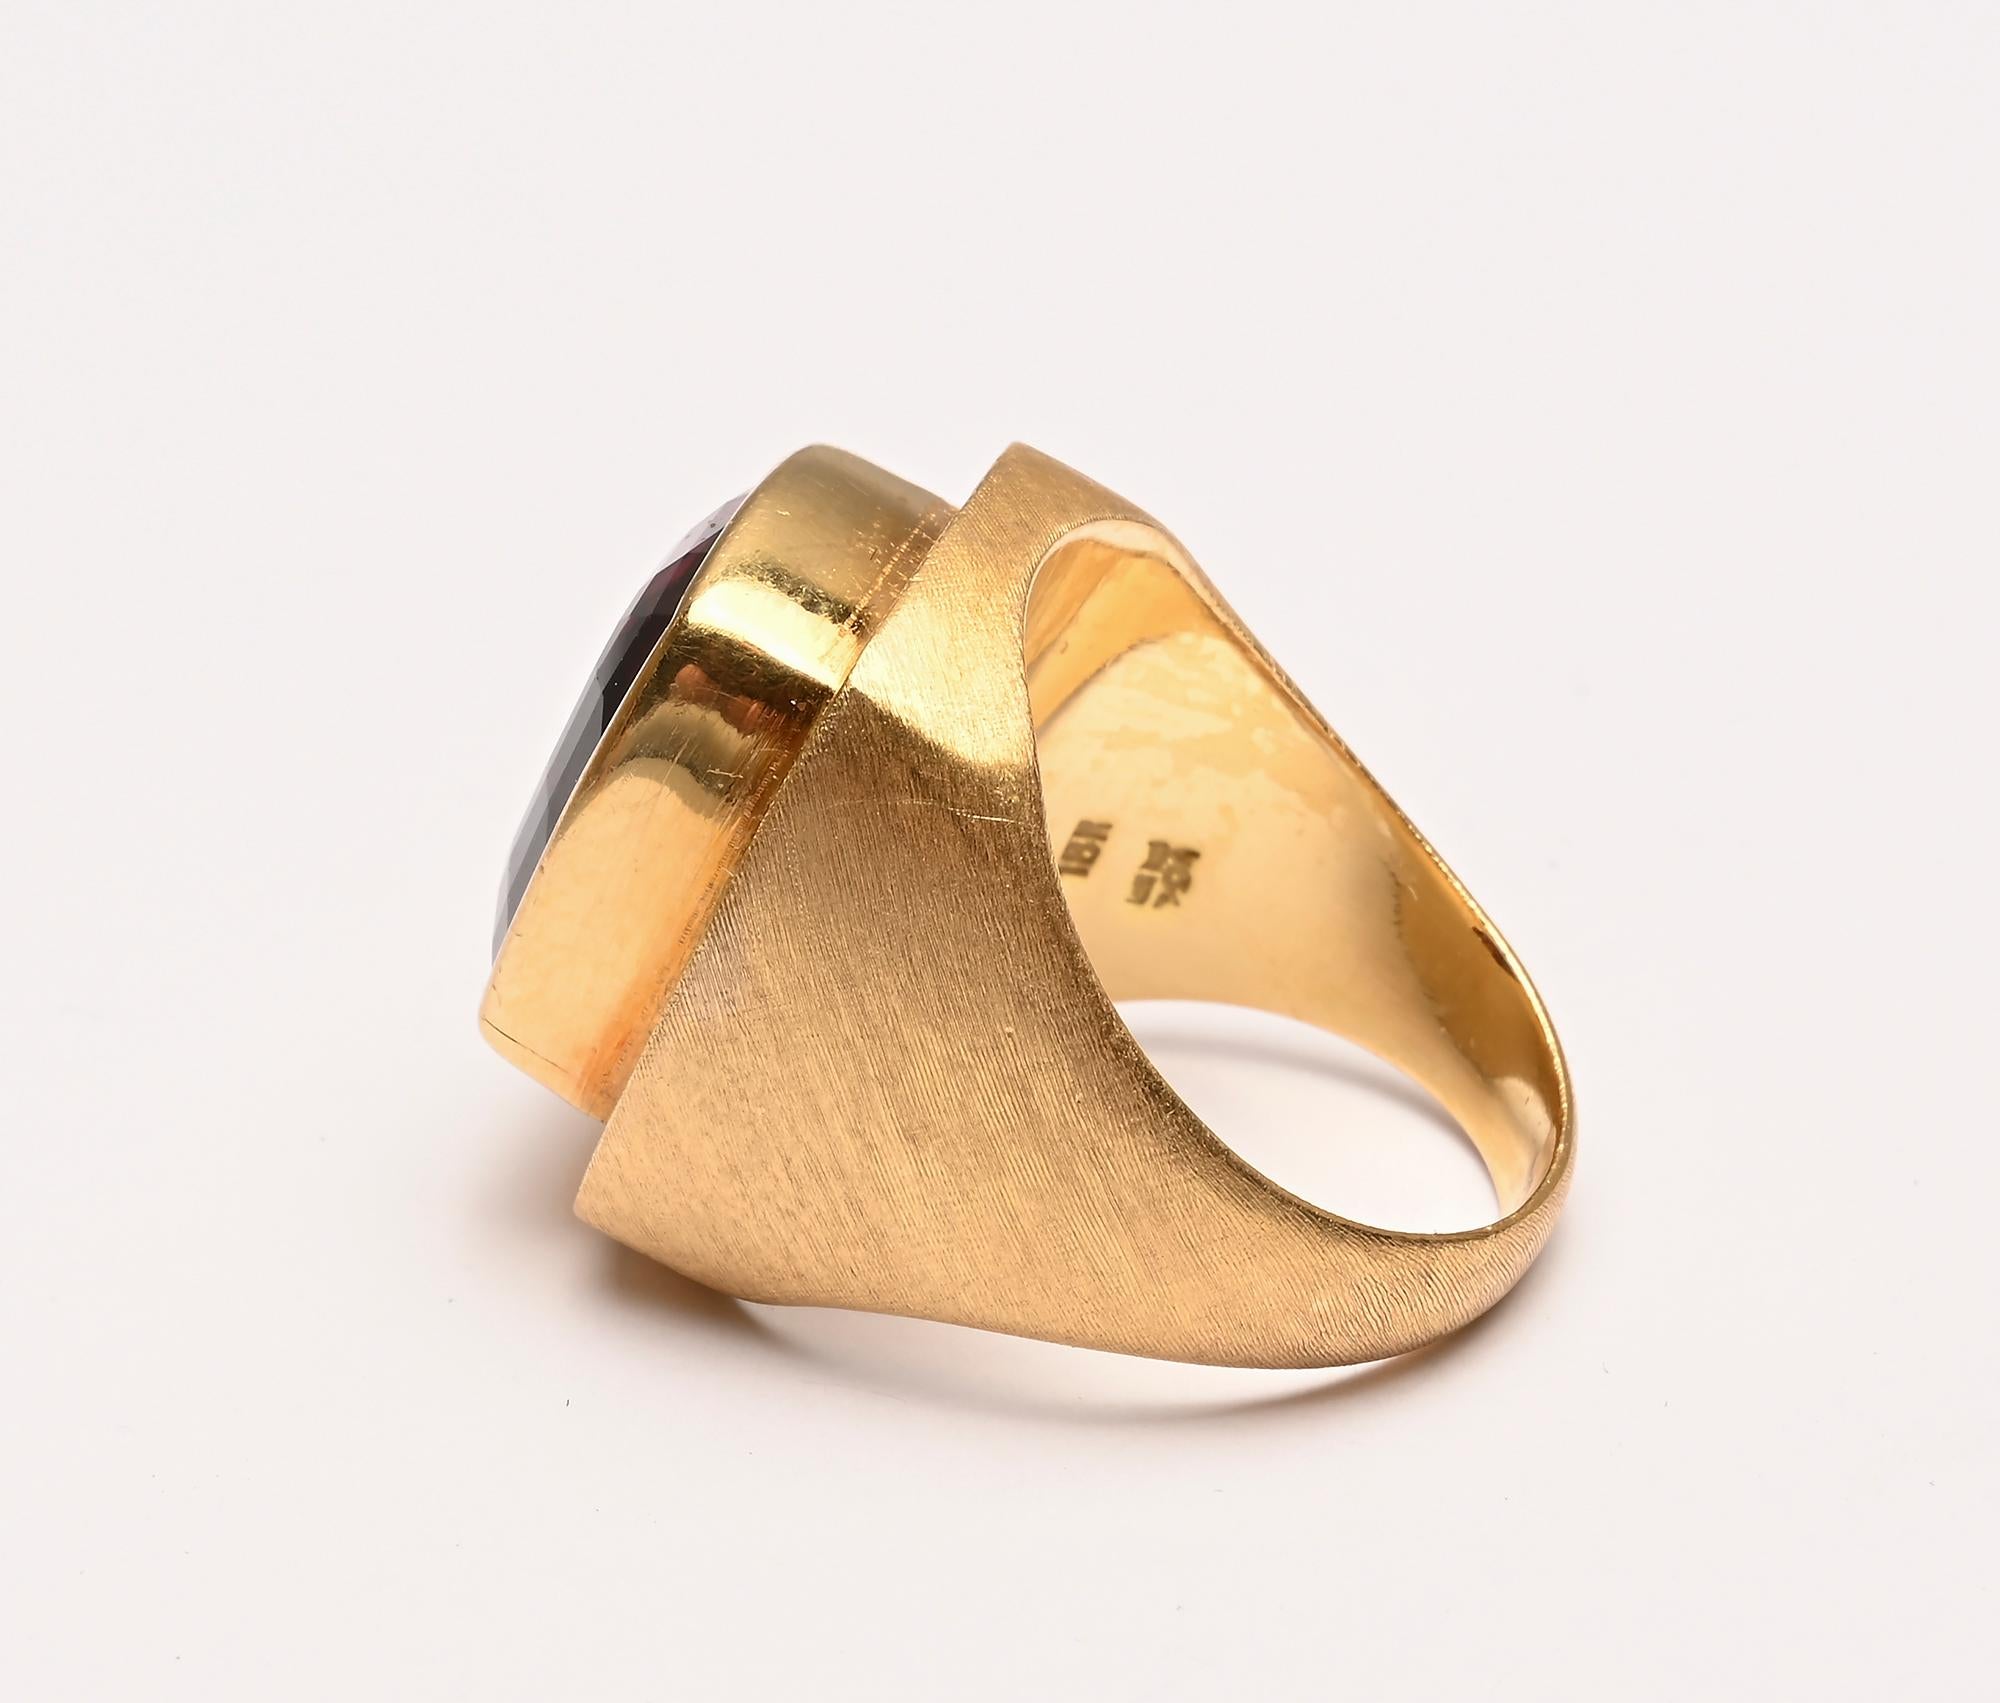 roberto burle marx gold ring